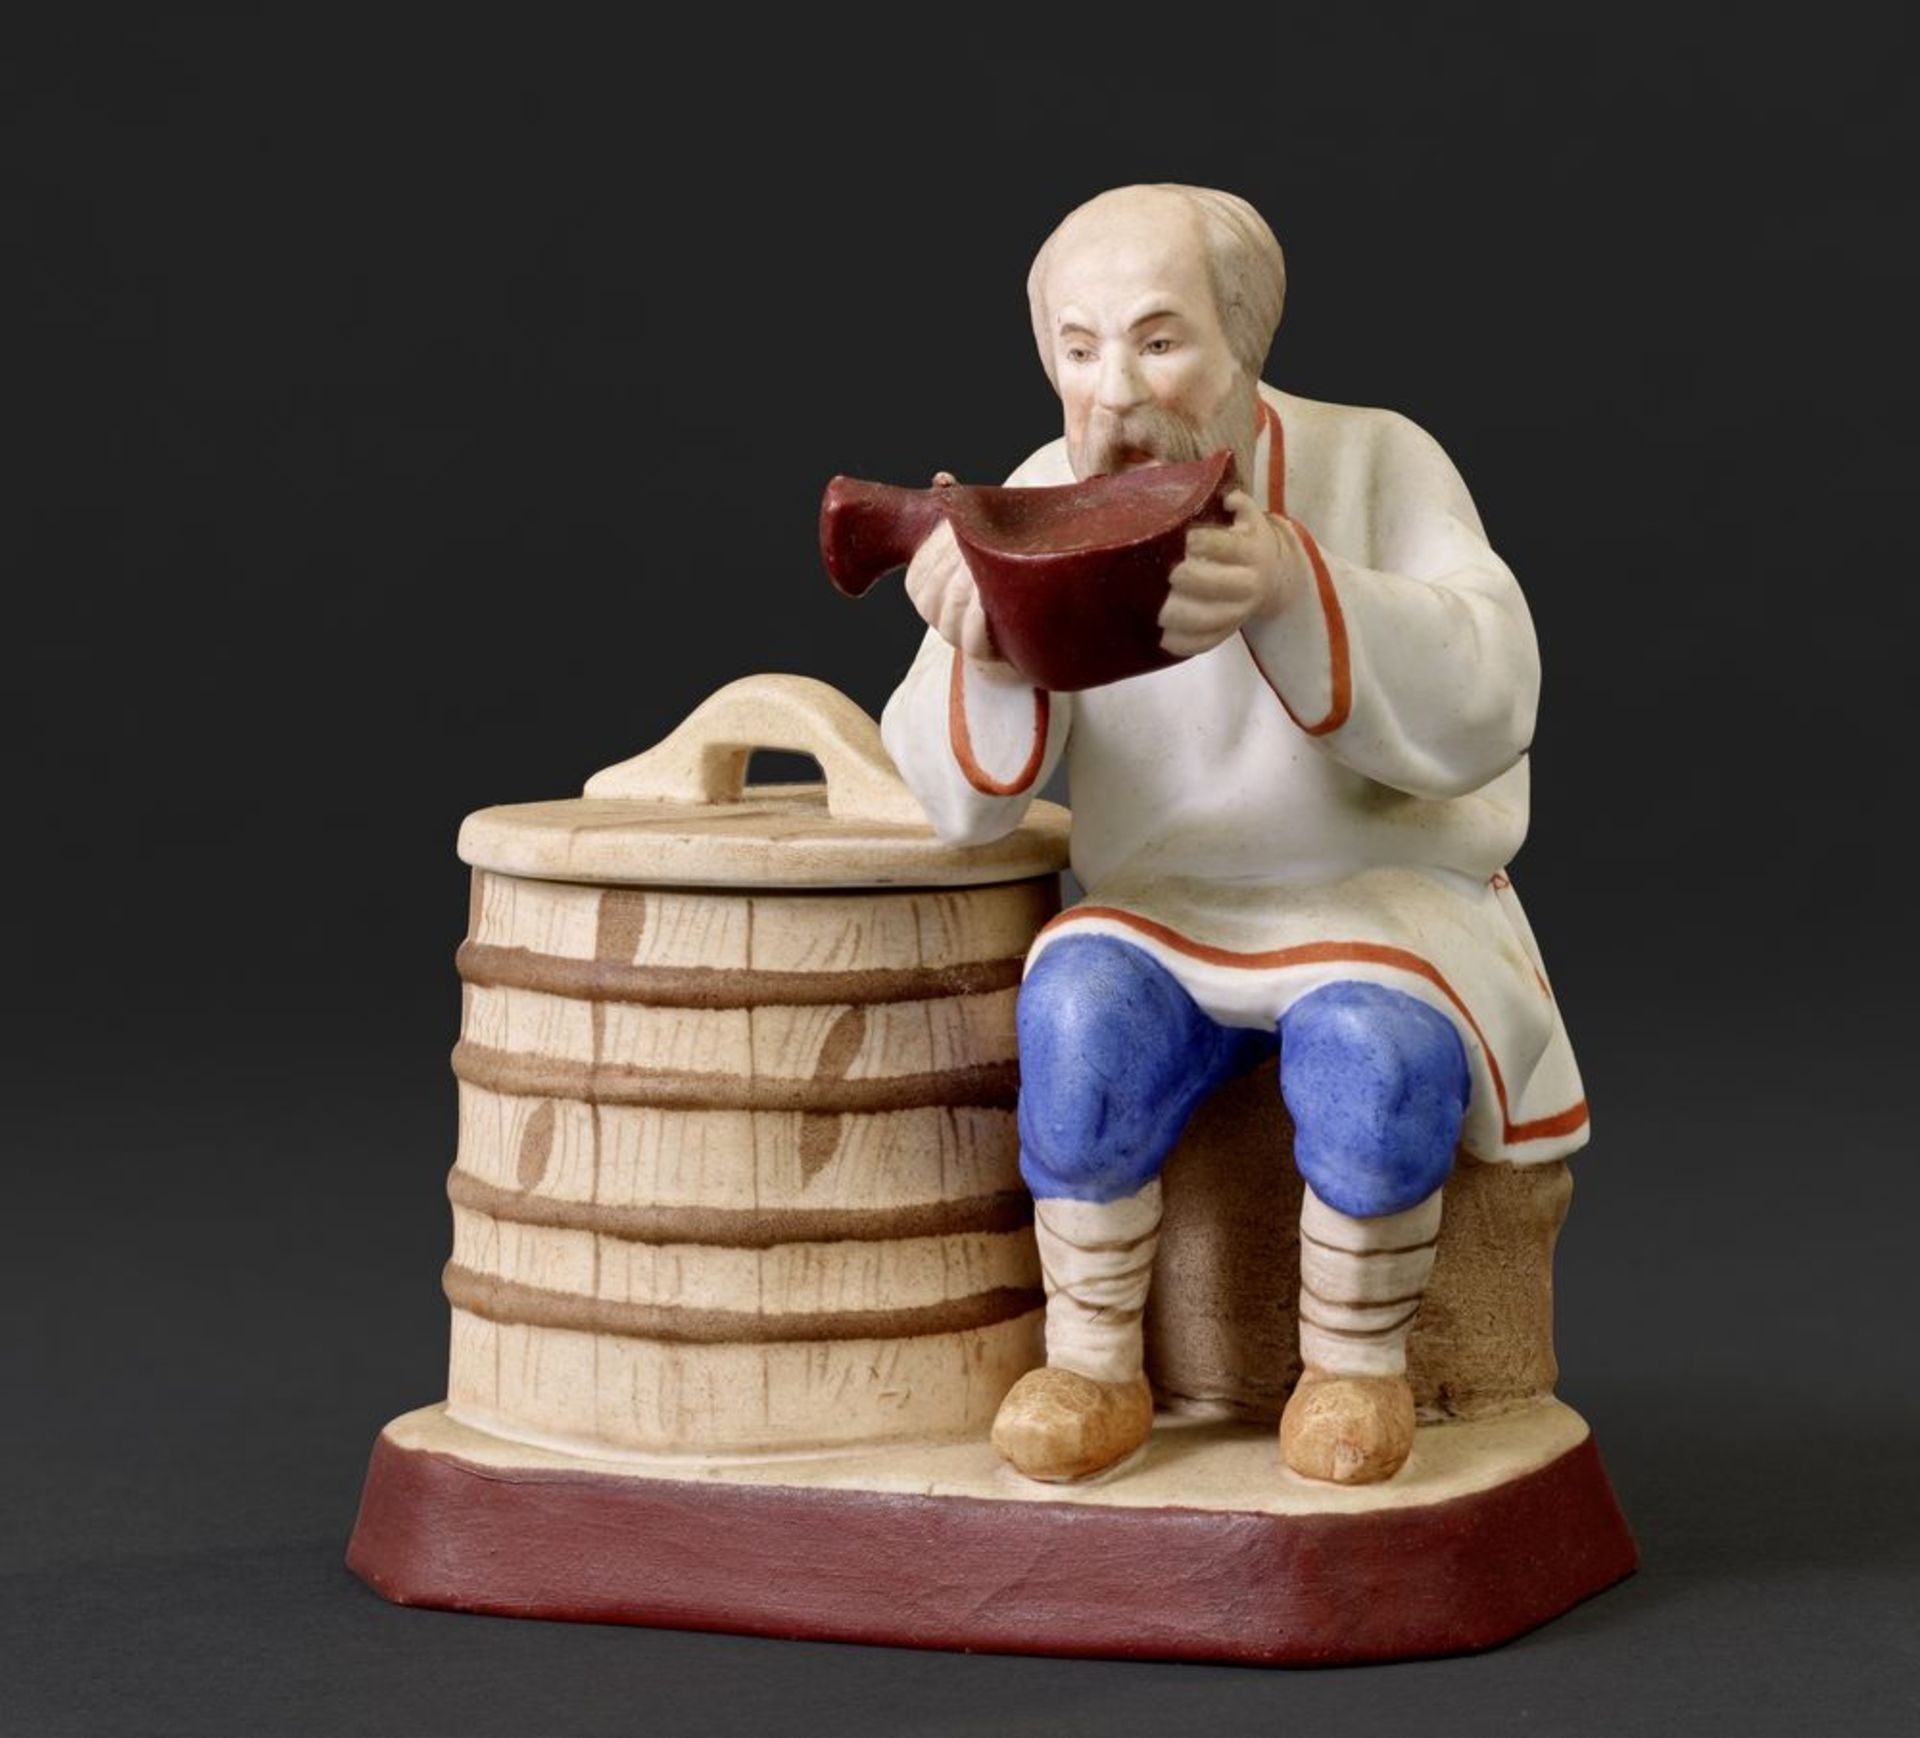 Peasant’s meal: A porcelain figure - GARDNER MANUFACTORY, VERBILKI, [...]